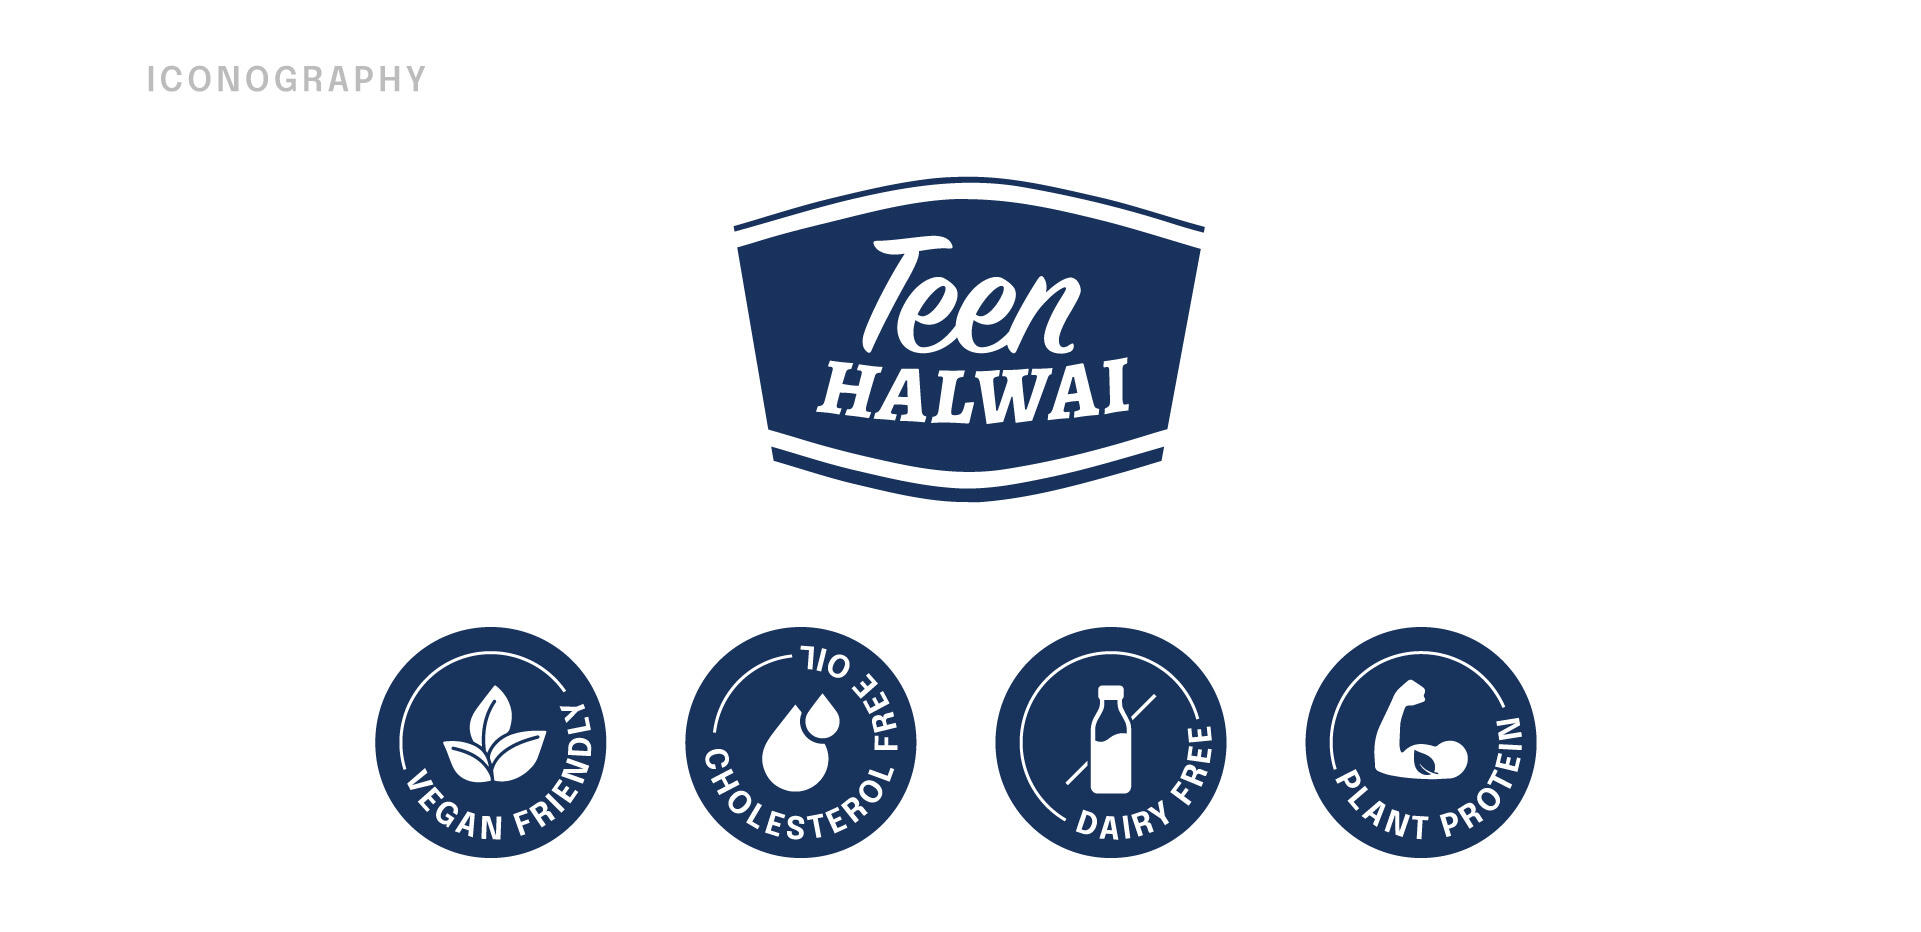 Ladoo lal halwai vector logo template design